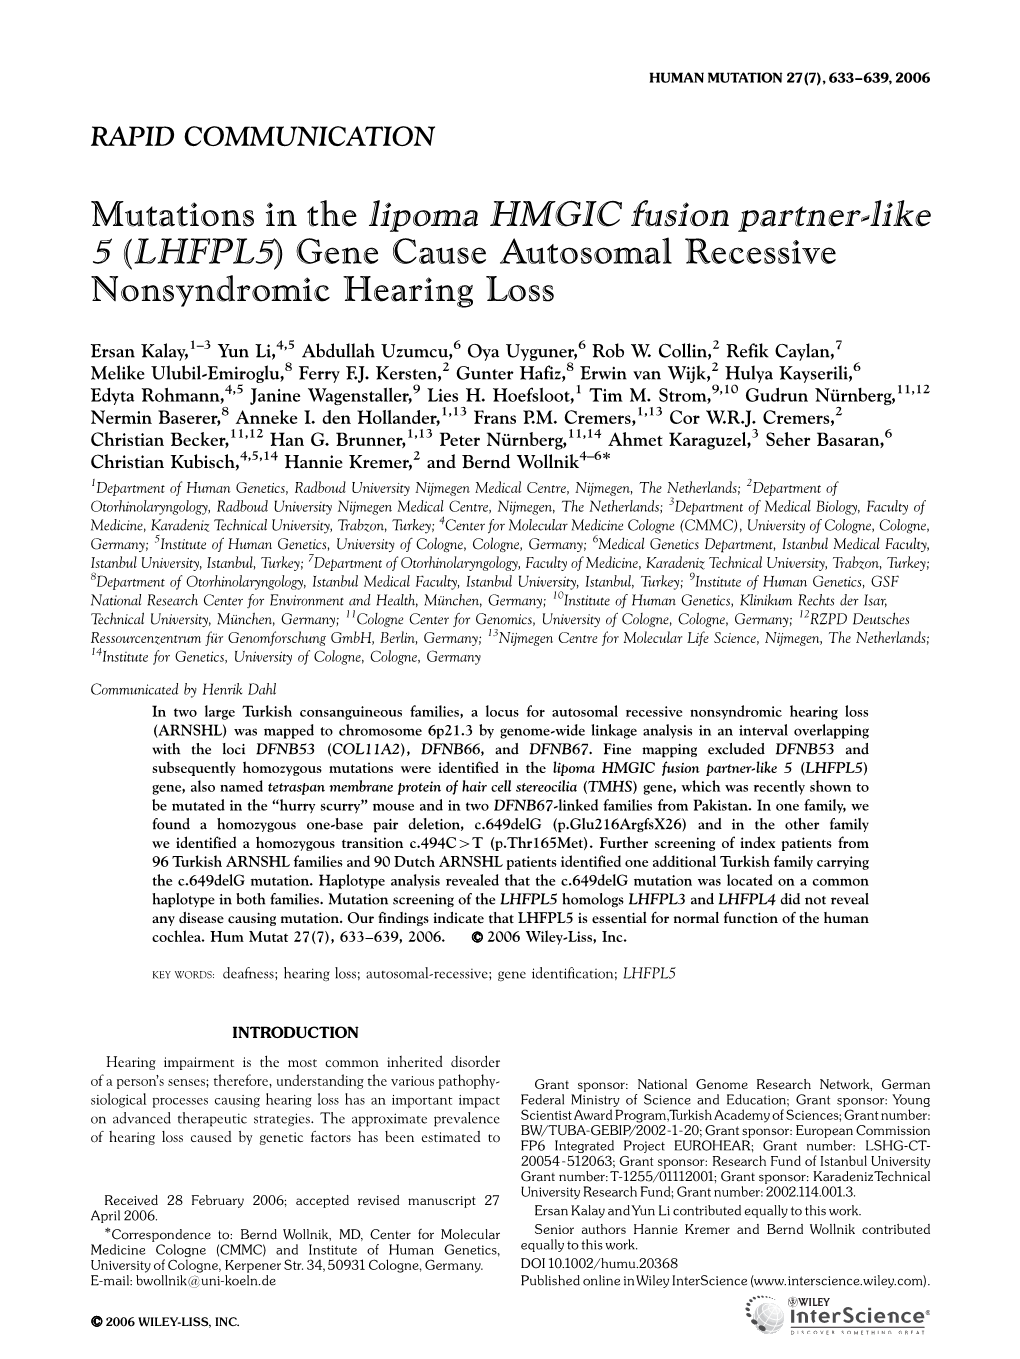 Mutations in the Lipoma HMGIC Fusion Partner-Like 5 (LHFPL5) Gene Cause Autosomal Recessive Nonsyndromic Hearing Loss